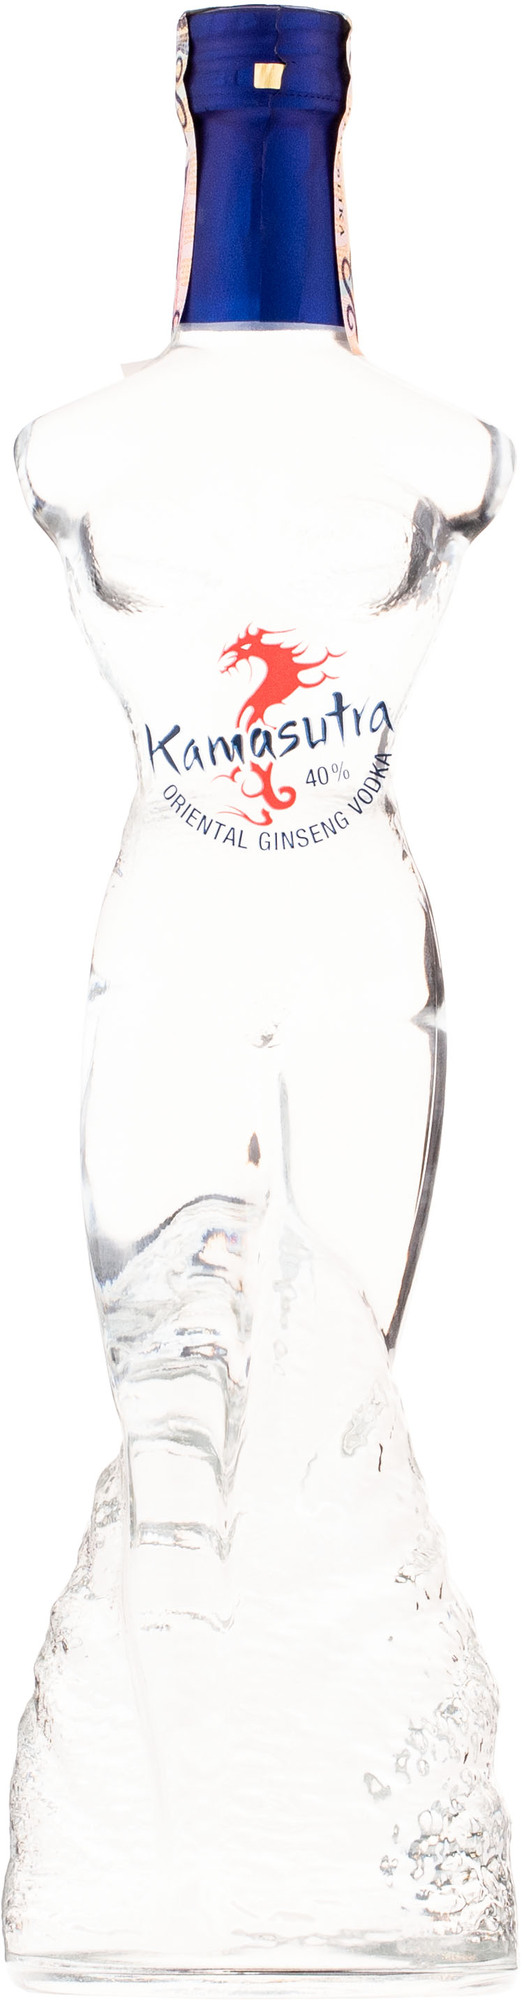 Kamasutra Oriental Ženšen Vodka 40% 0,5l